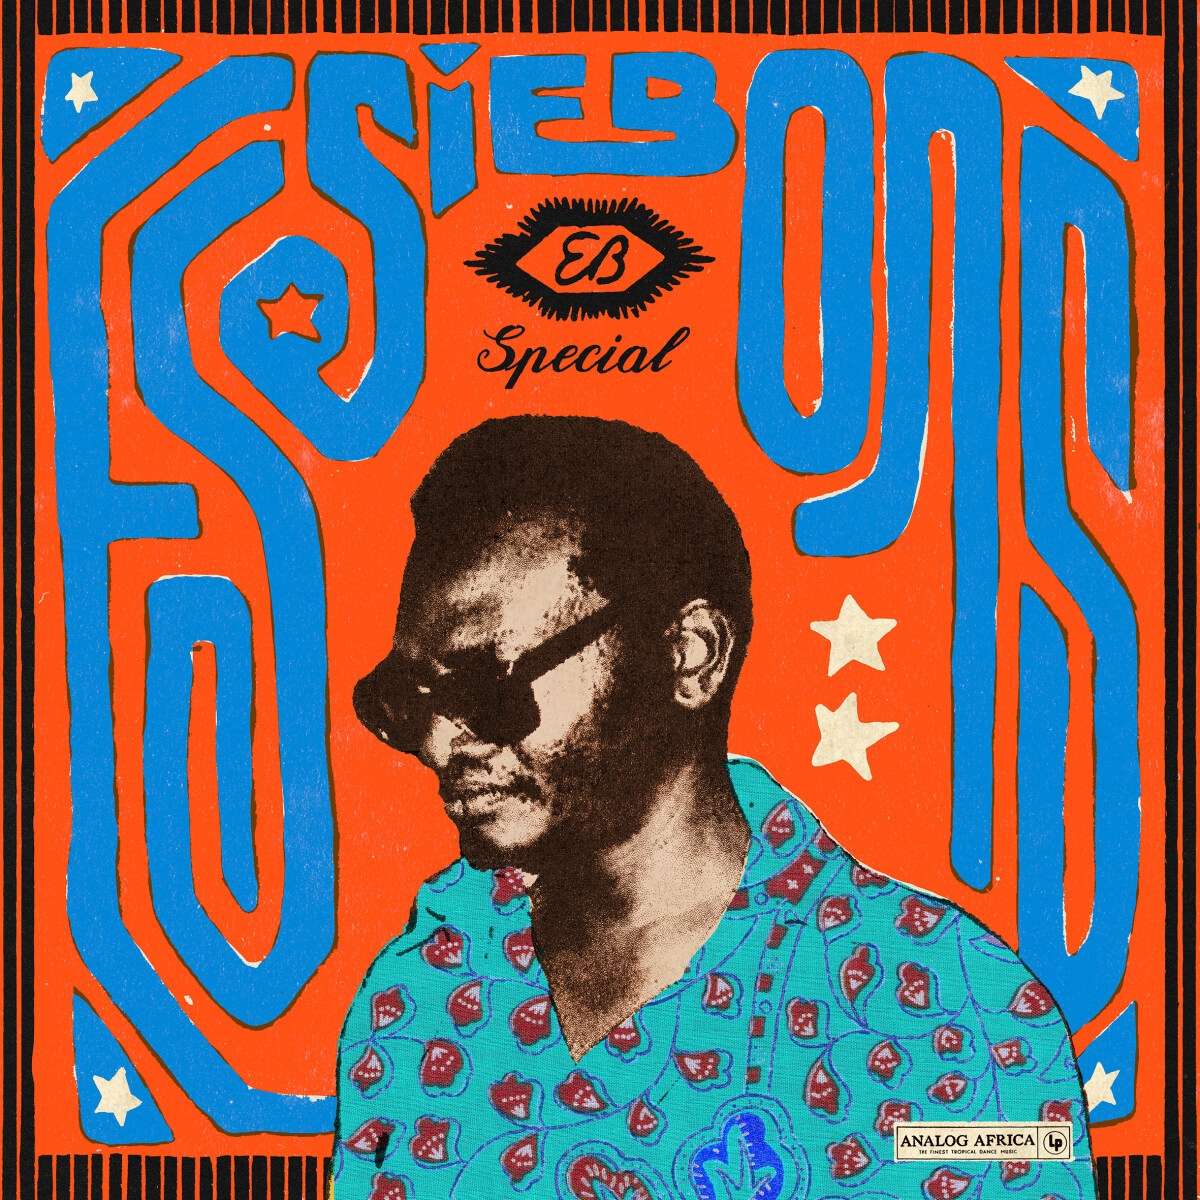 Essiebons Special 1973 - 1984 - Ghana Music Power House - 33RPM